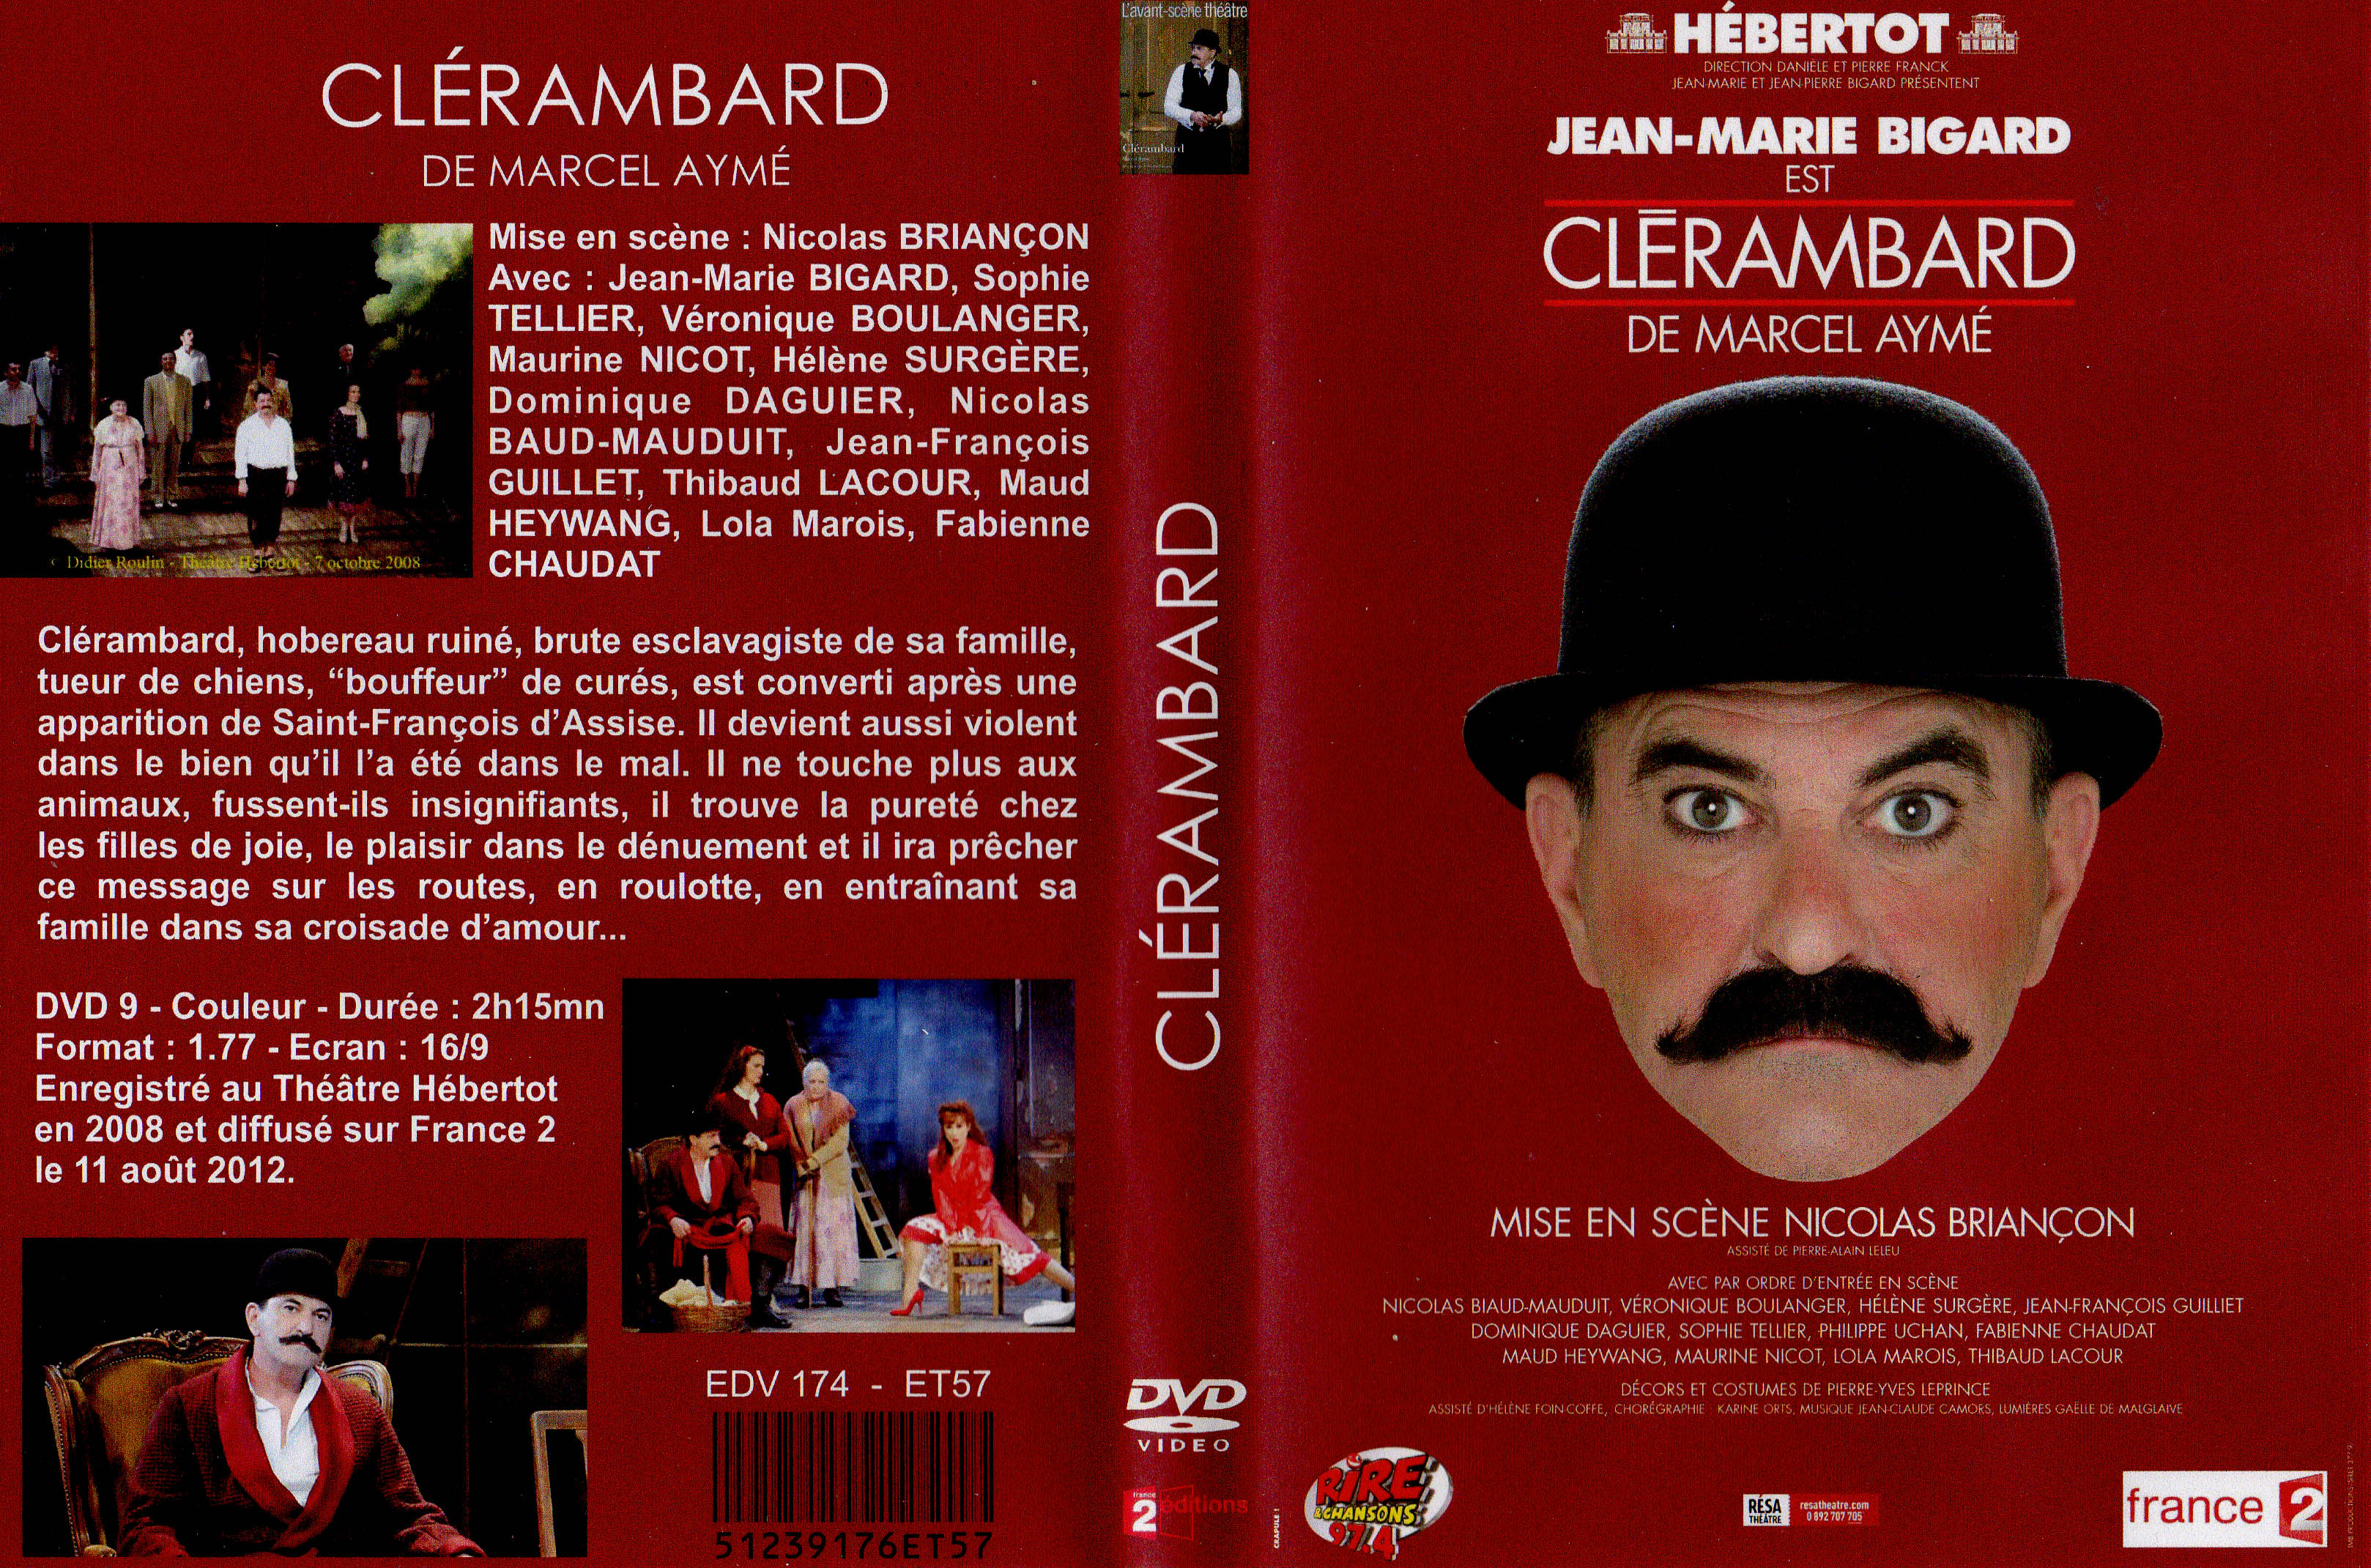 Jaquette DVD Clrambard - Thtre custom